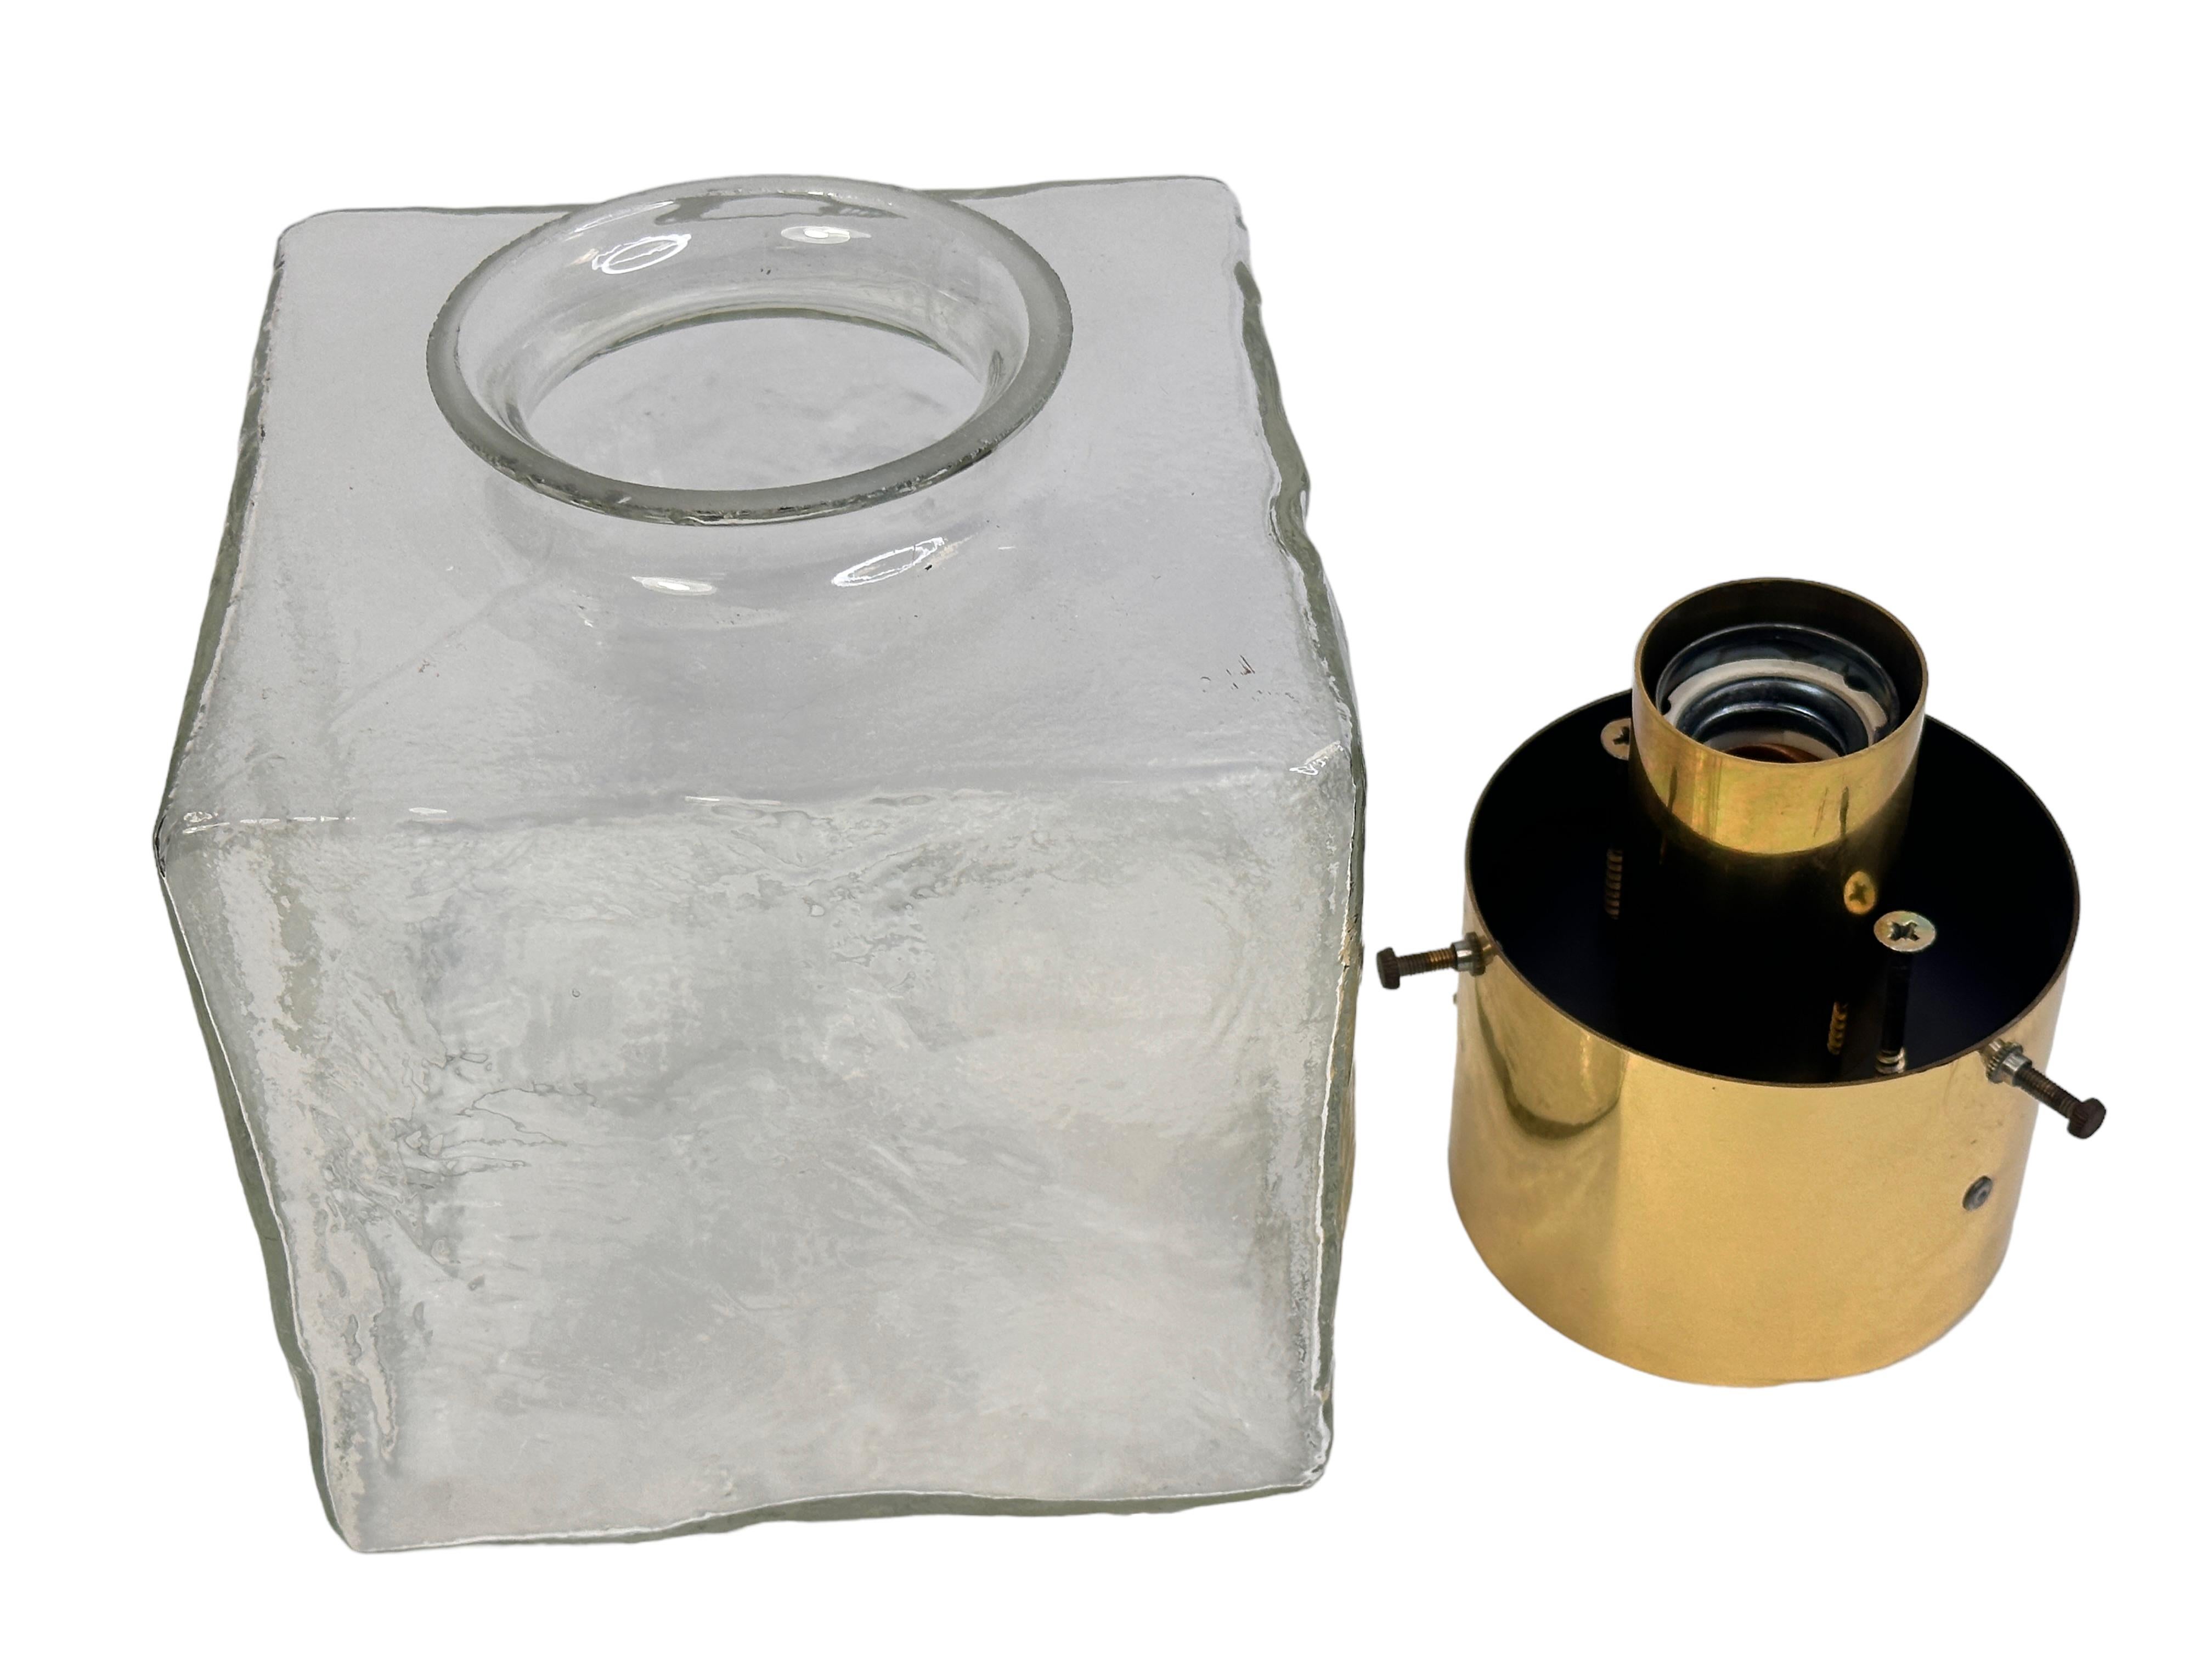 Pair of Large Ice Glass Cube Brass Flush Mount Light Fixture by Kalmar, Austria For Sale 5